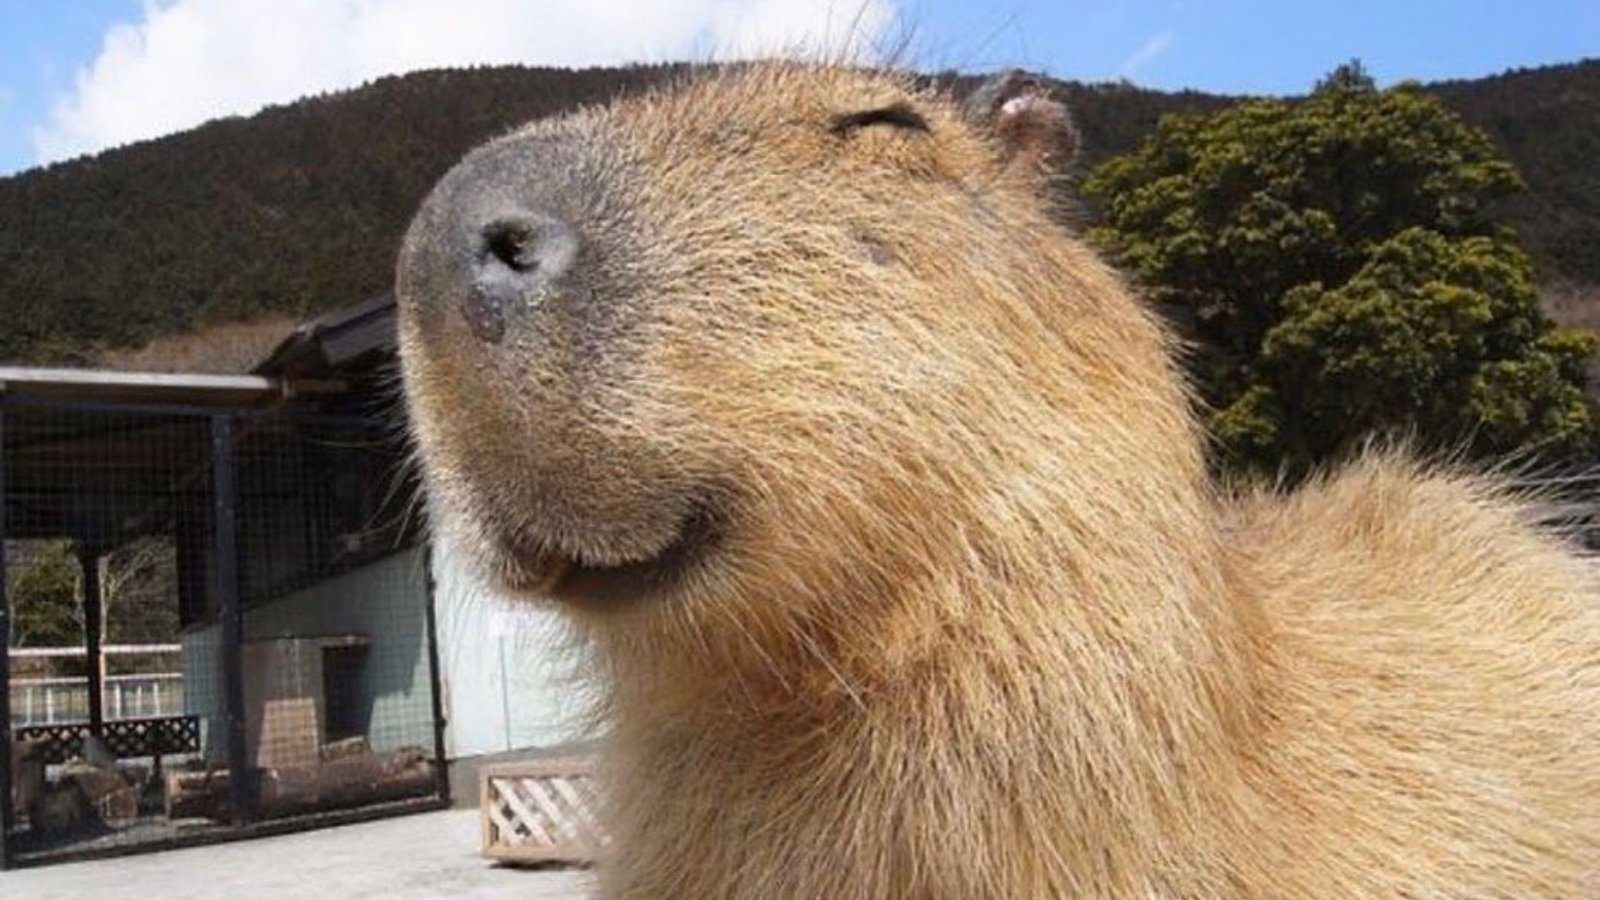 The origins of the capybara meme